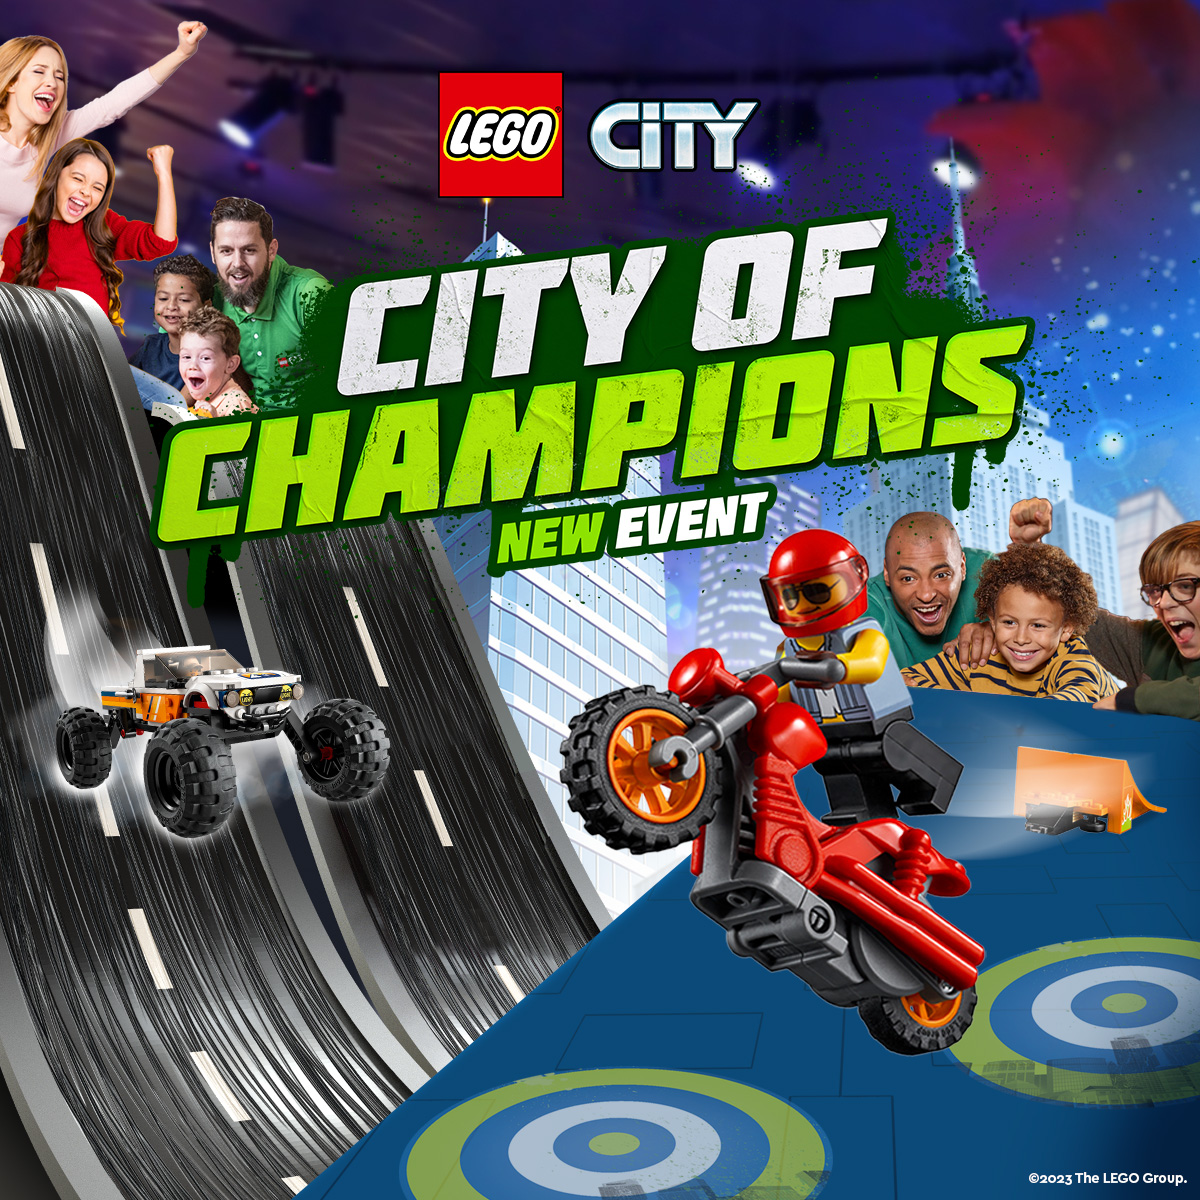 LEGO City of Champions